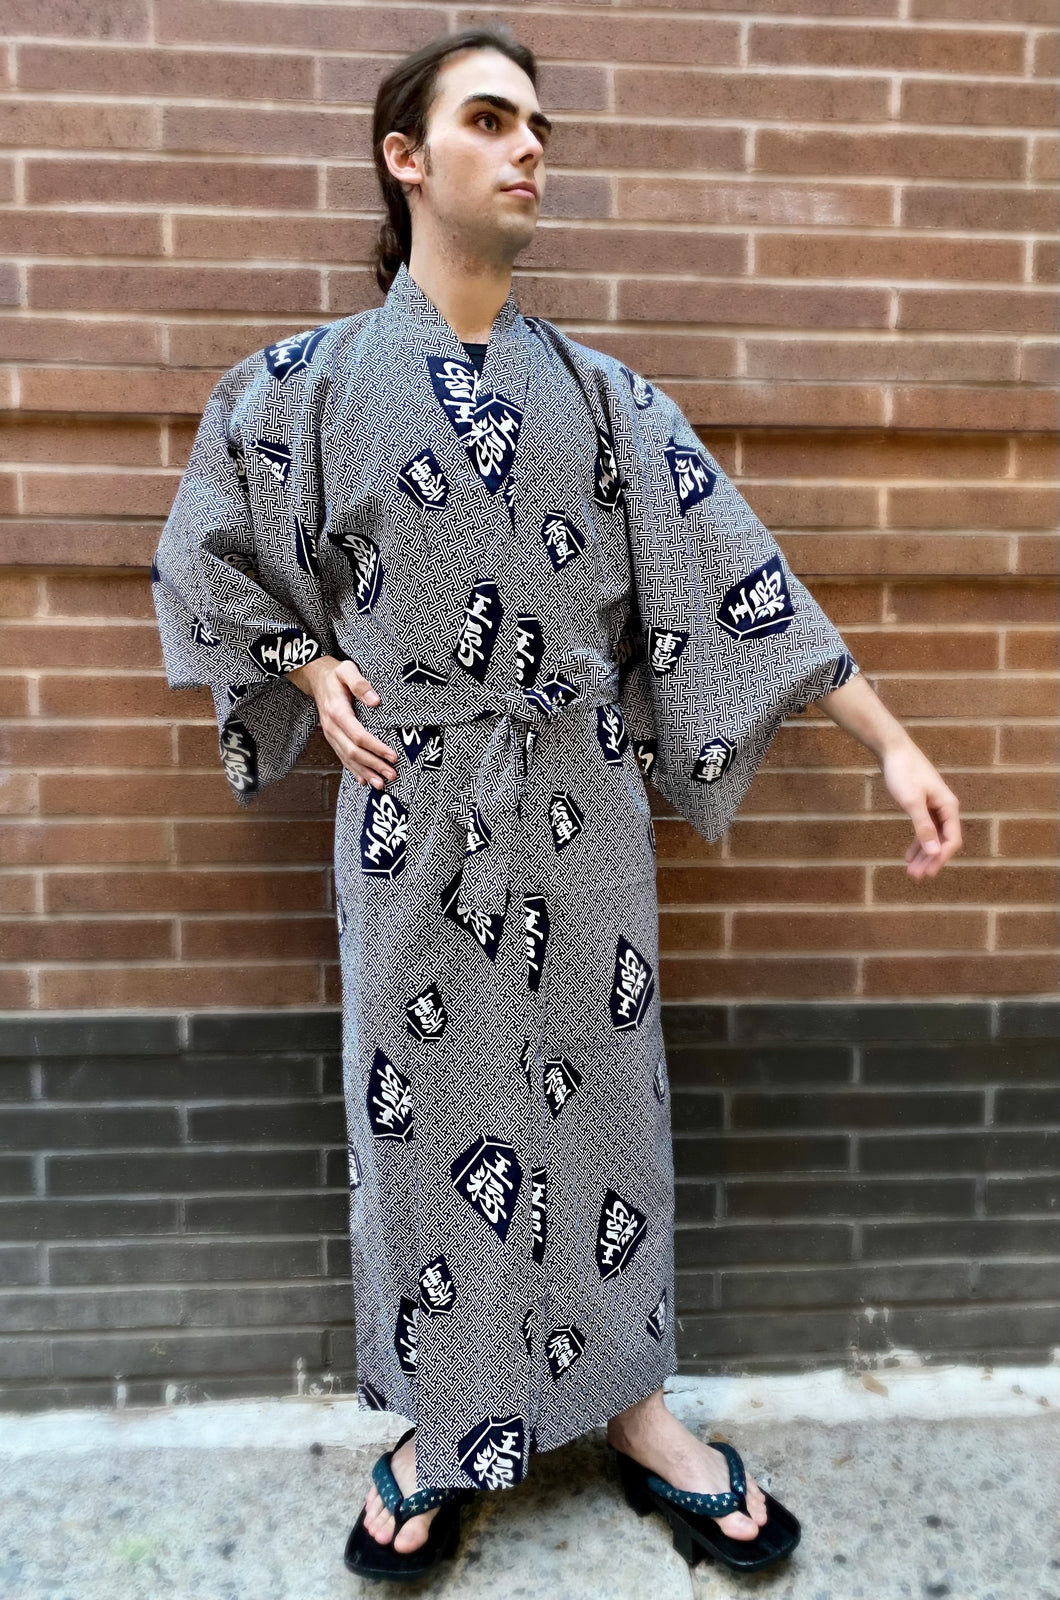 Kimono Sleeve Robe - navy/white Japanese chess design on weave pattern